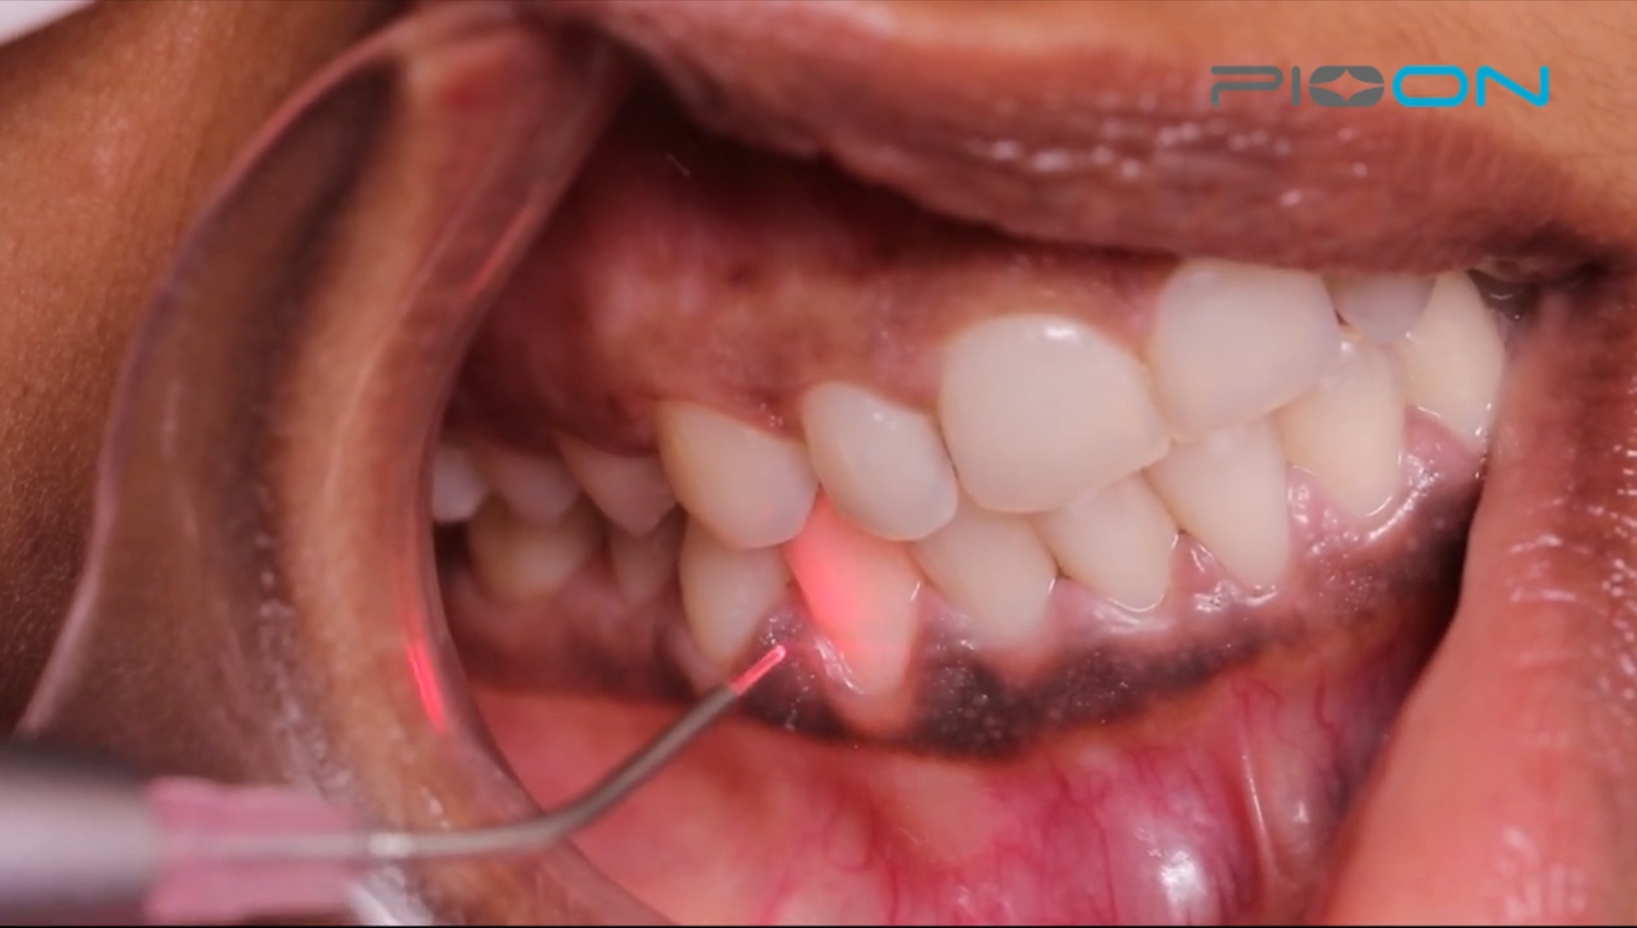 dentine hypersensitivity